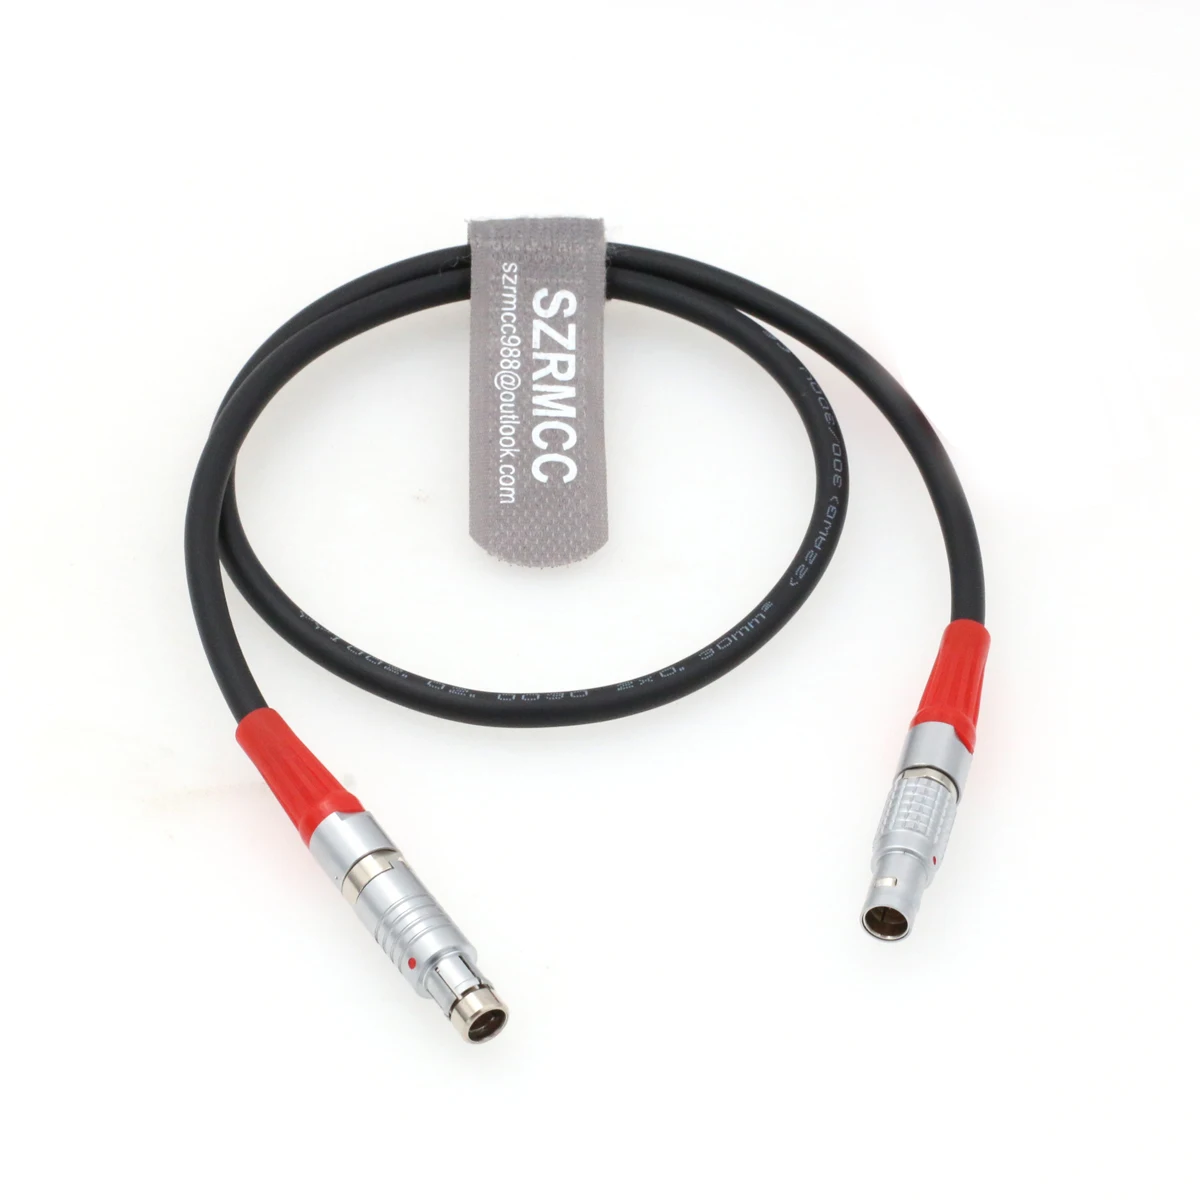 ARRI Alexa RS Fischer 3 Pin Male to 0B 4 Pin Male Power Cable for ARRI FIZ Lbus Cforce RF Lens Motor